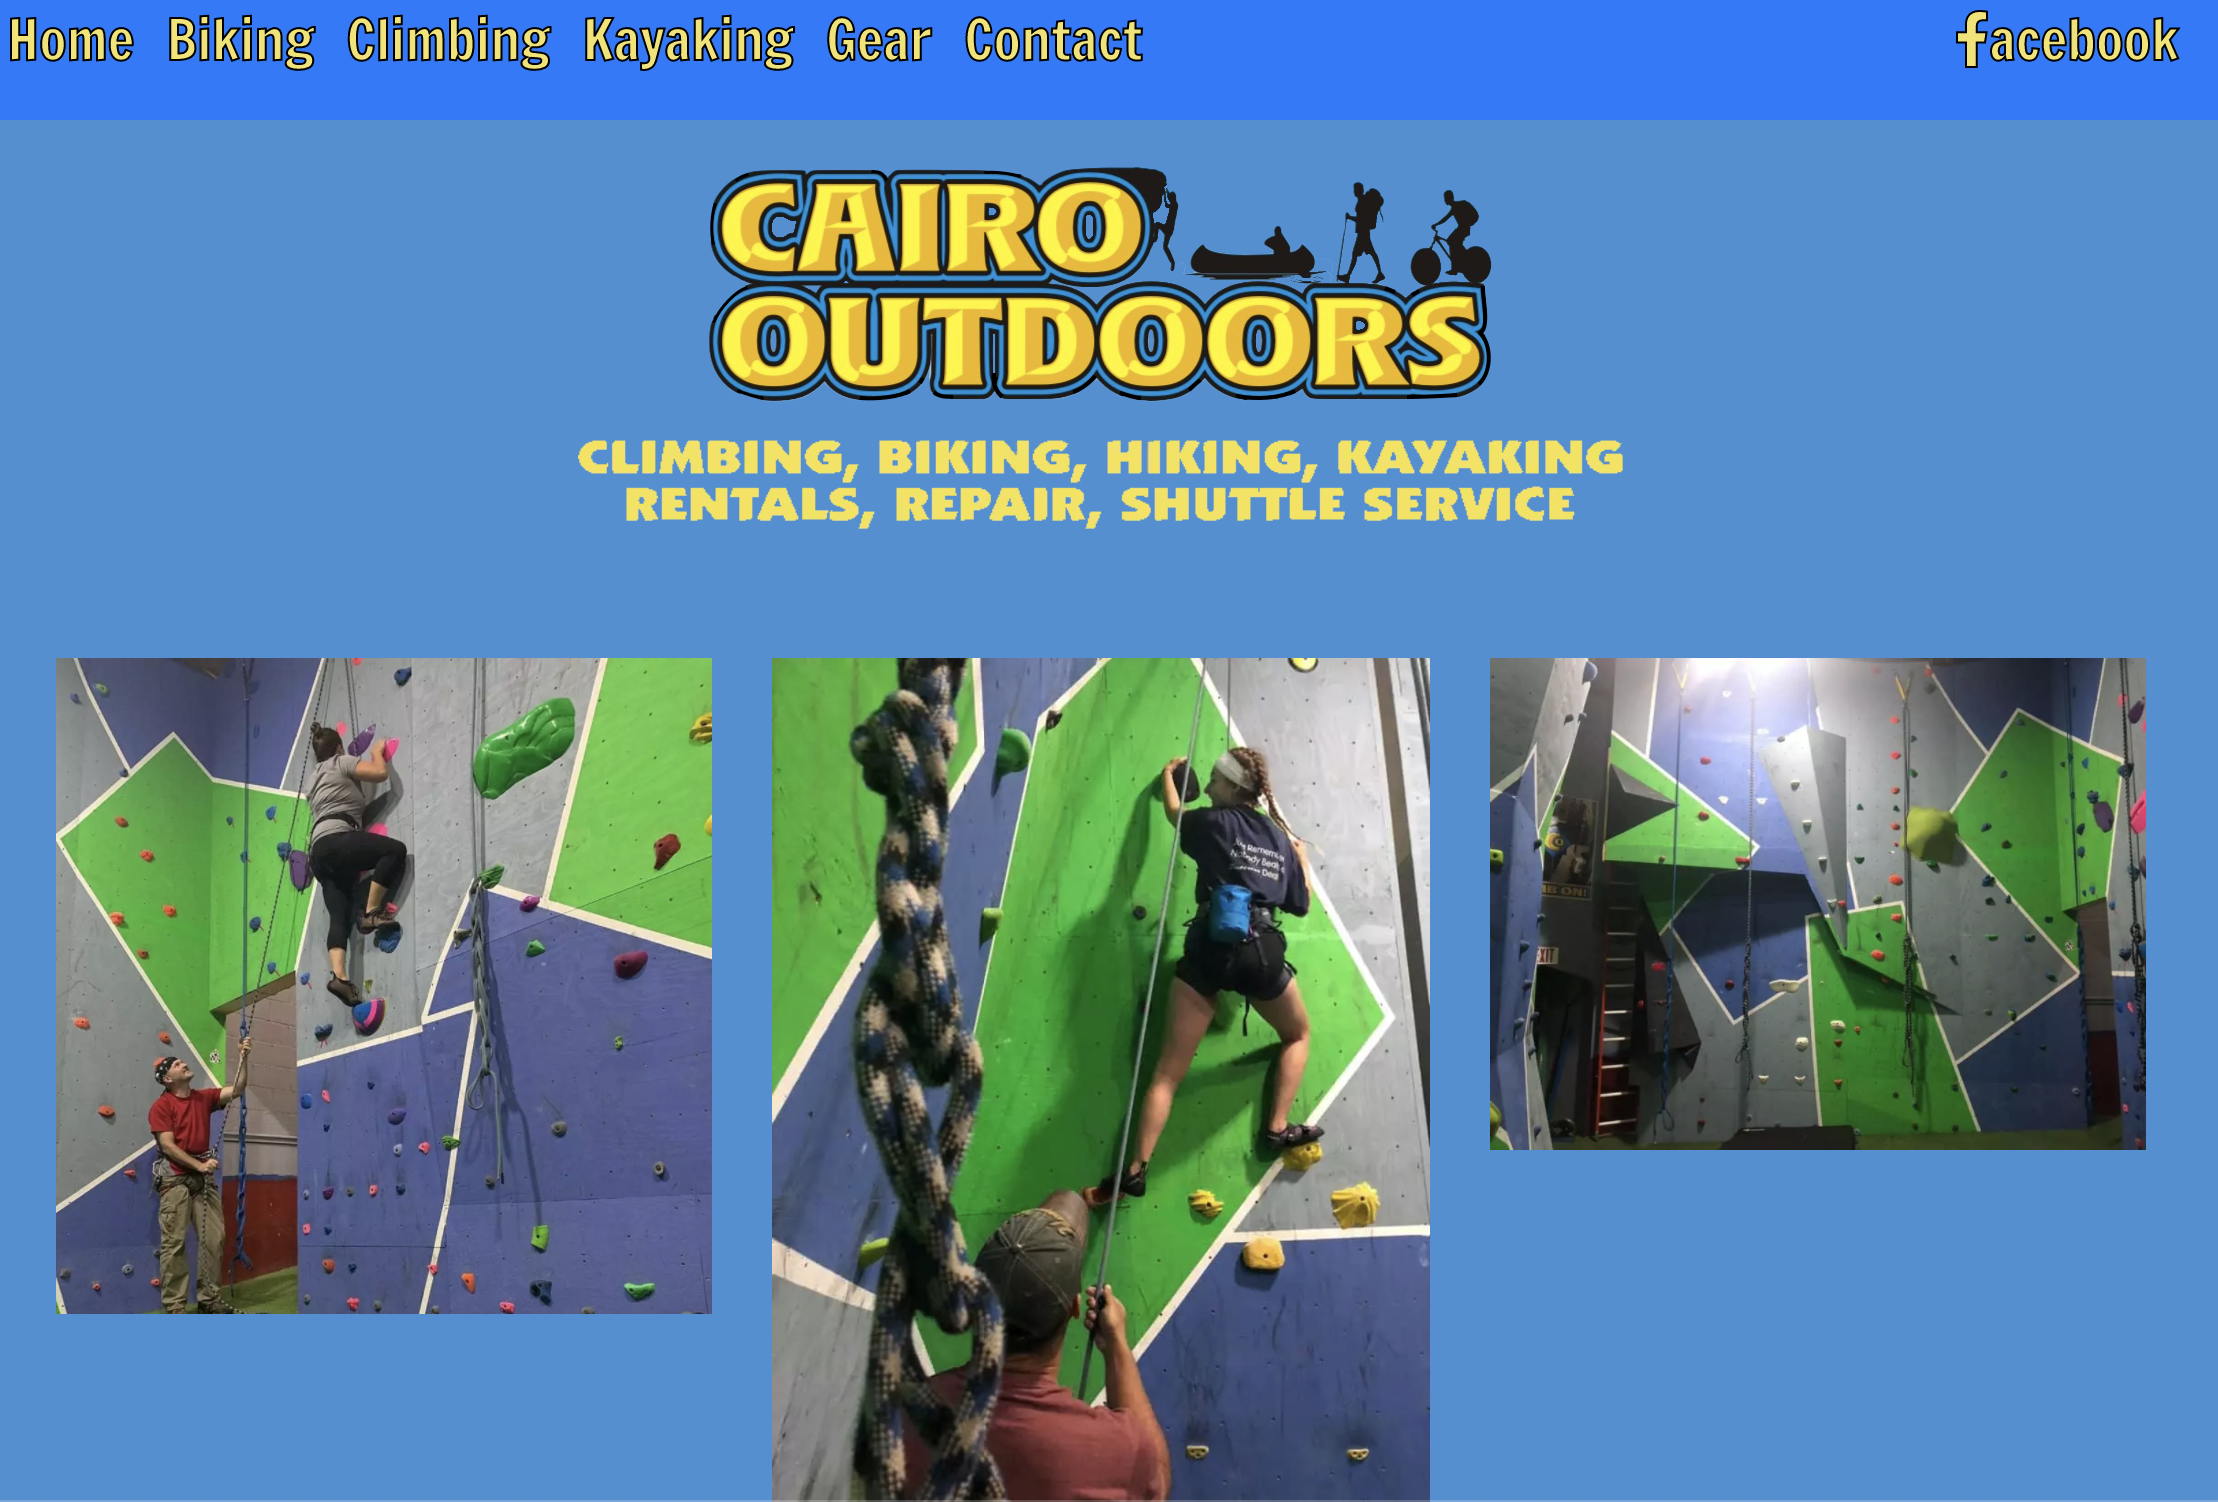 /static/cairo_outdoors/climbing.png